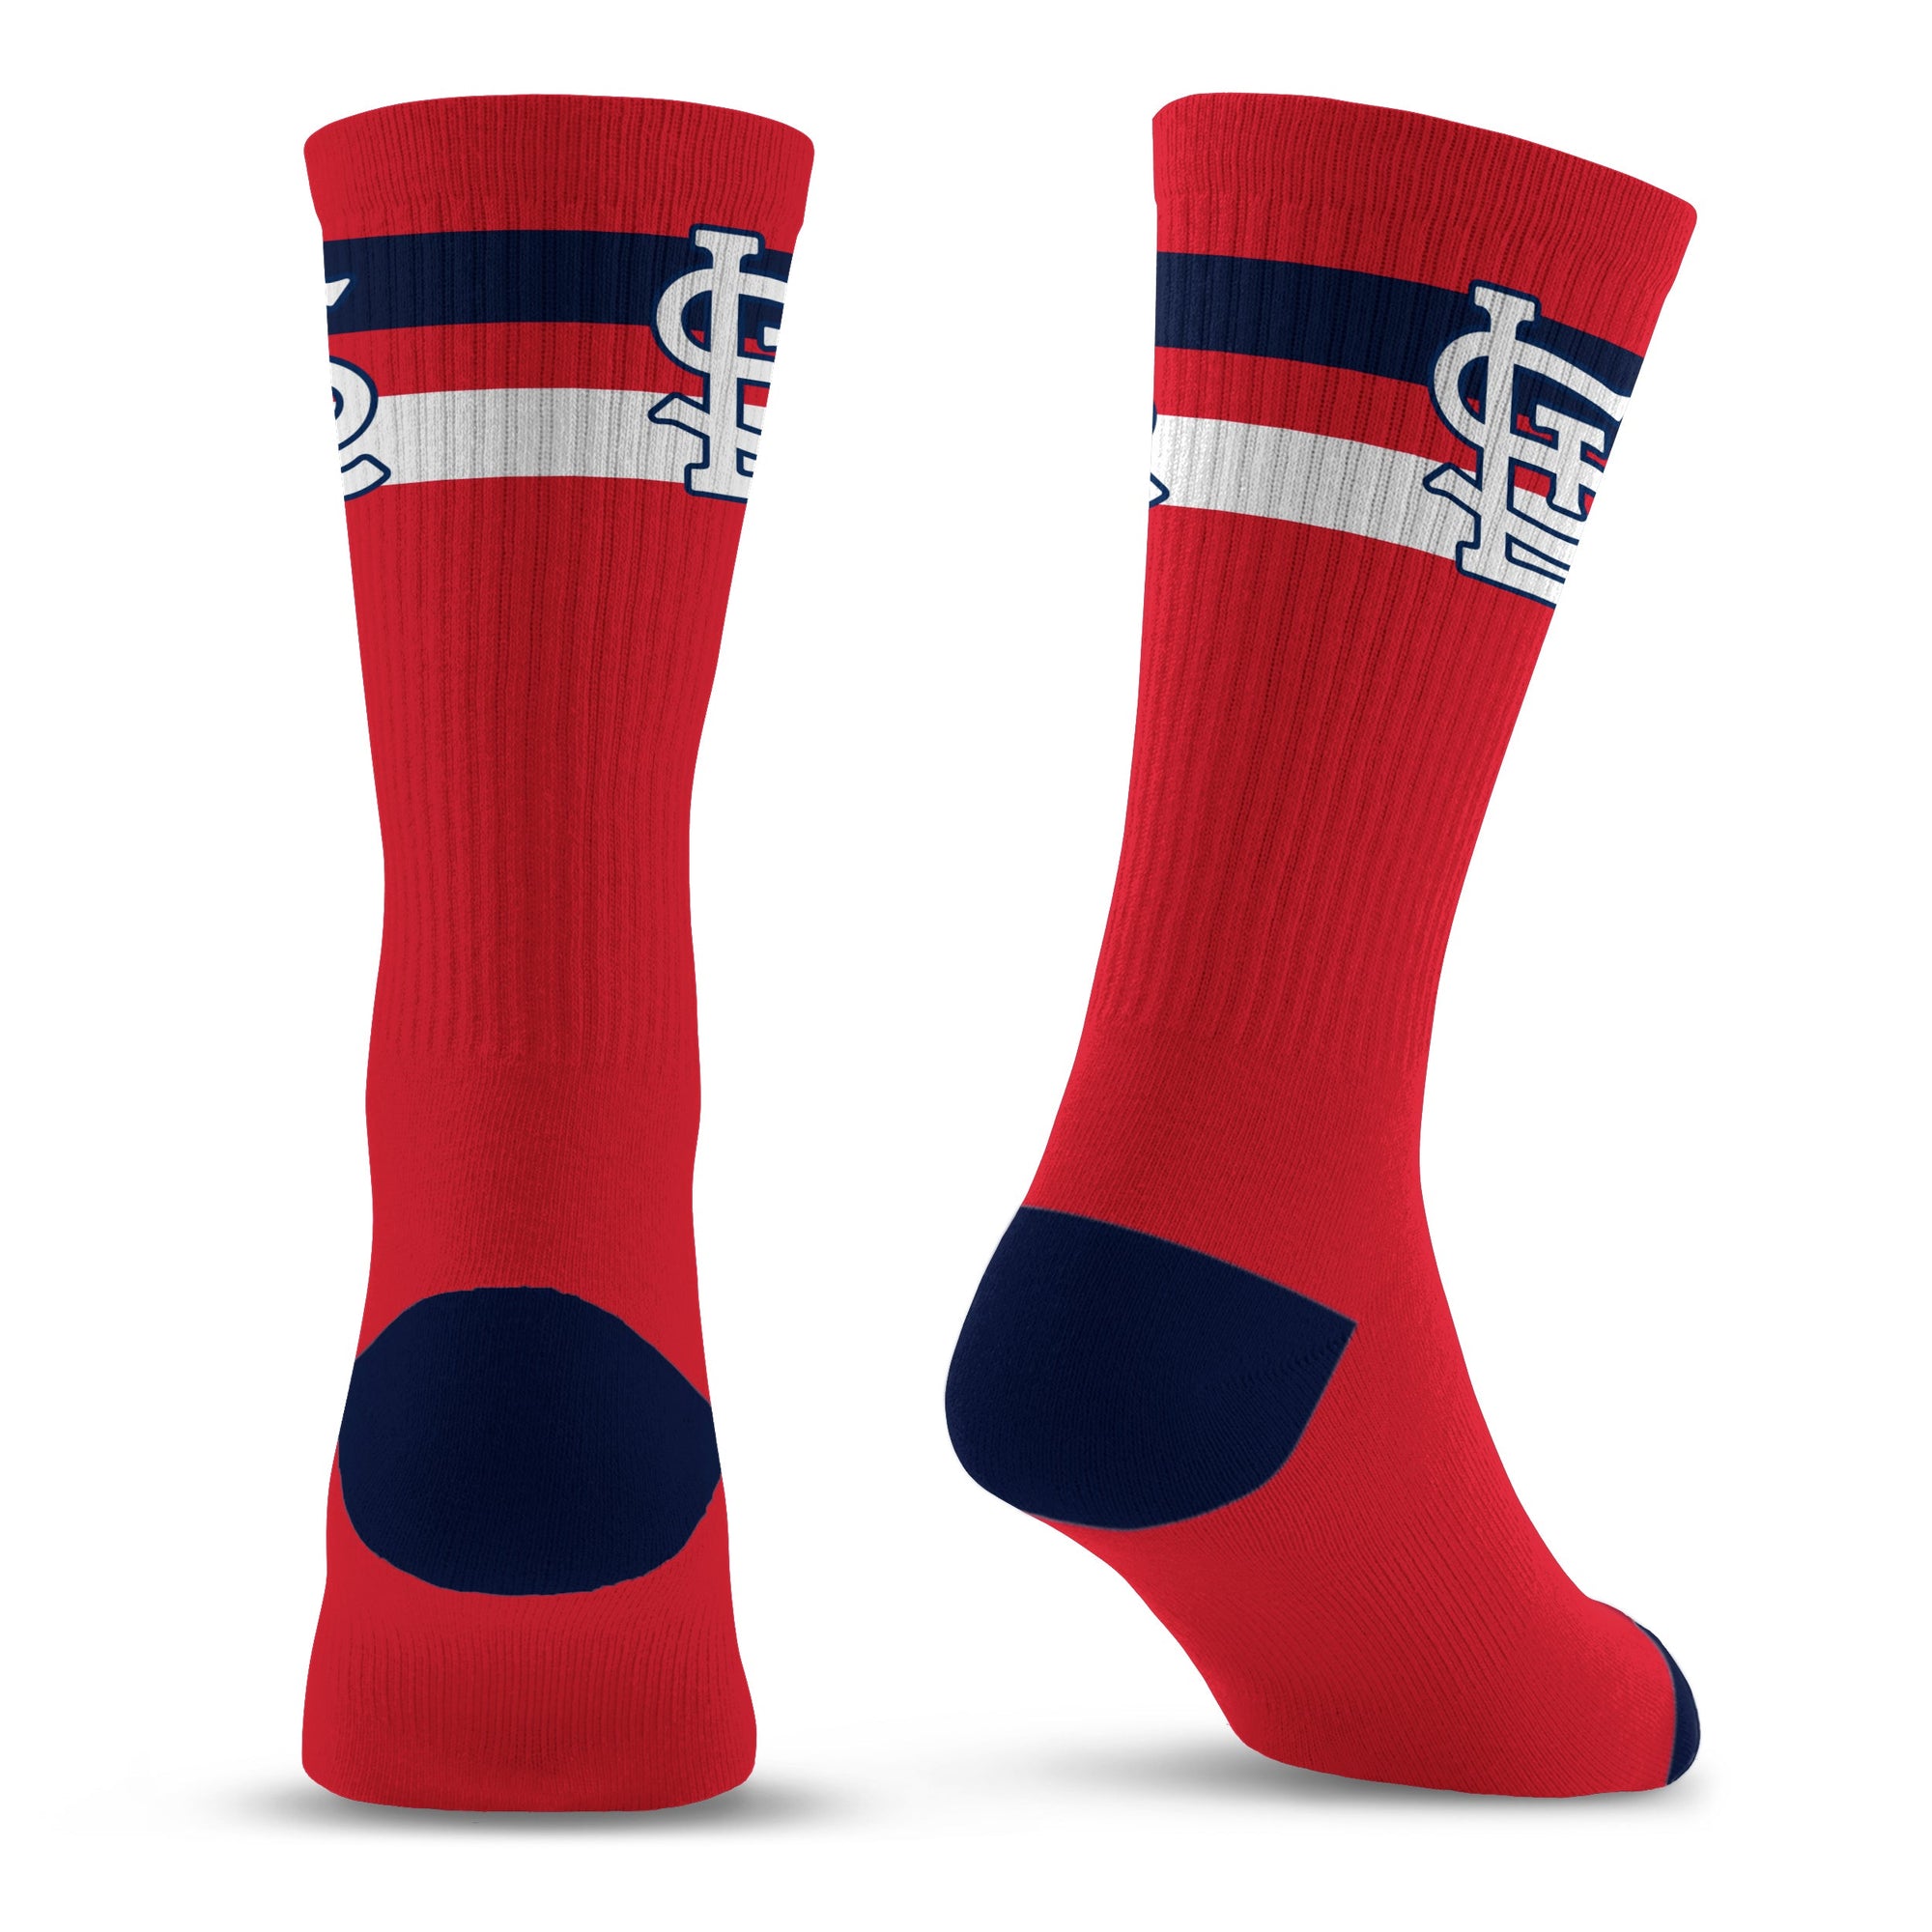 Cardinal Red Socks Made of New Wool